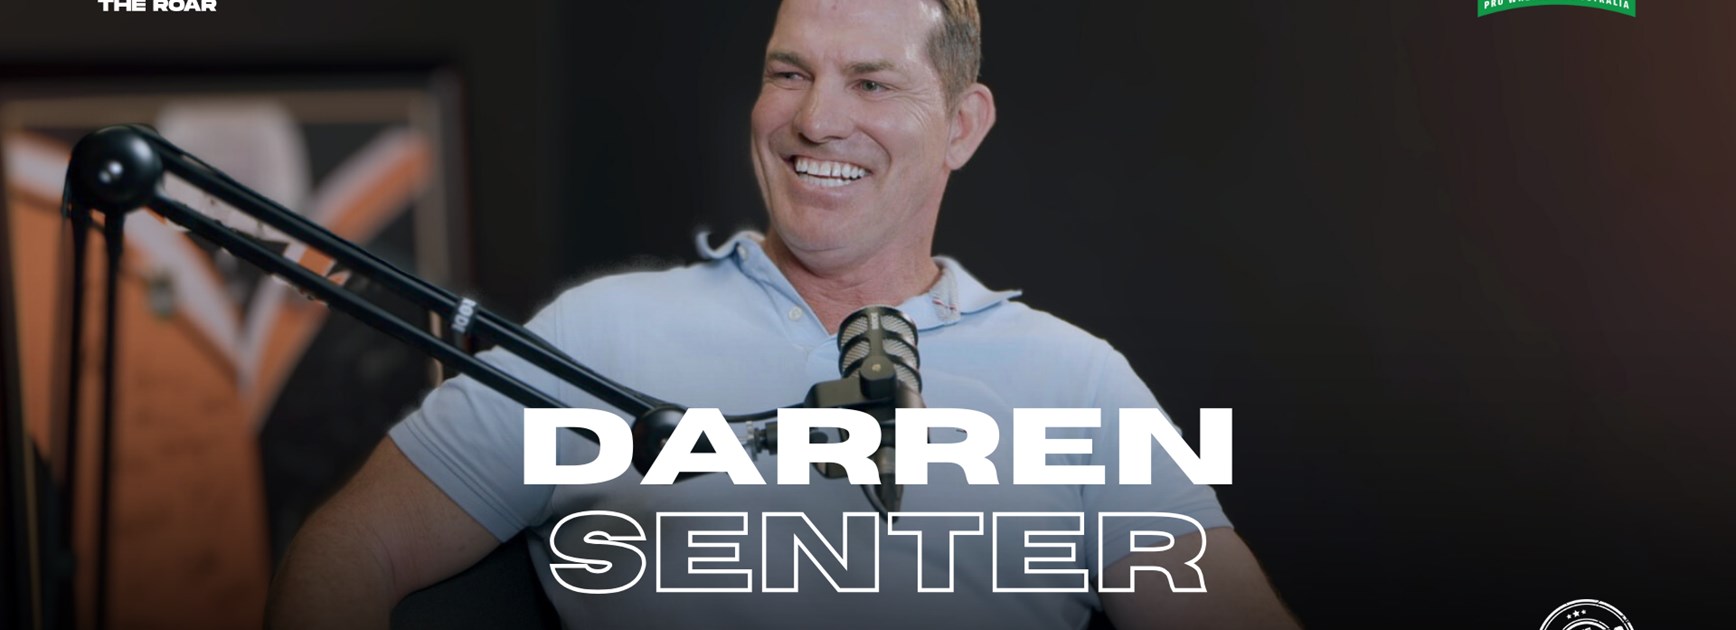 Podcast BTR: Episode 46 with Darren Senter